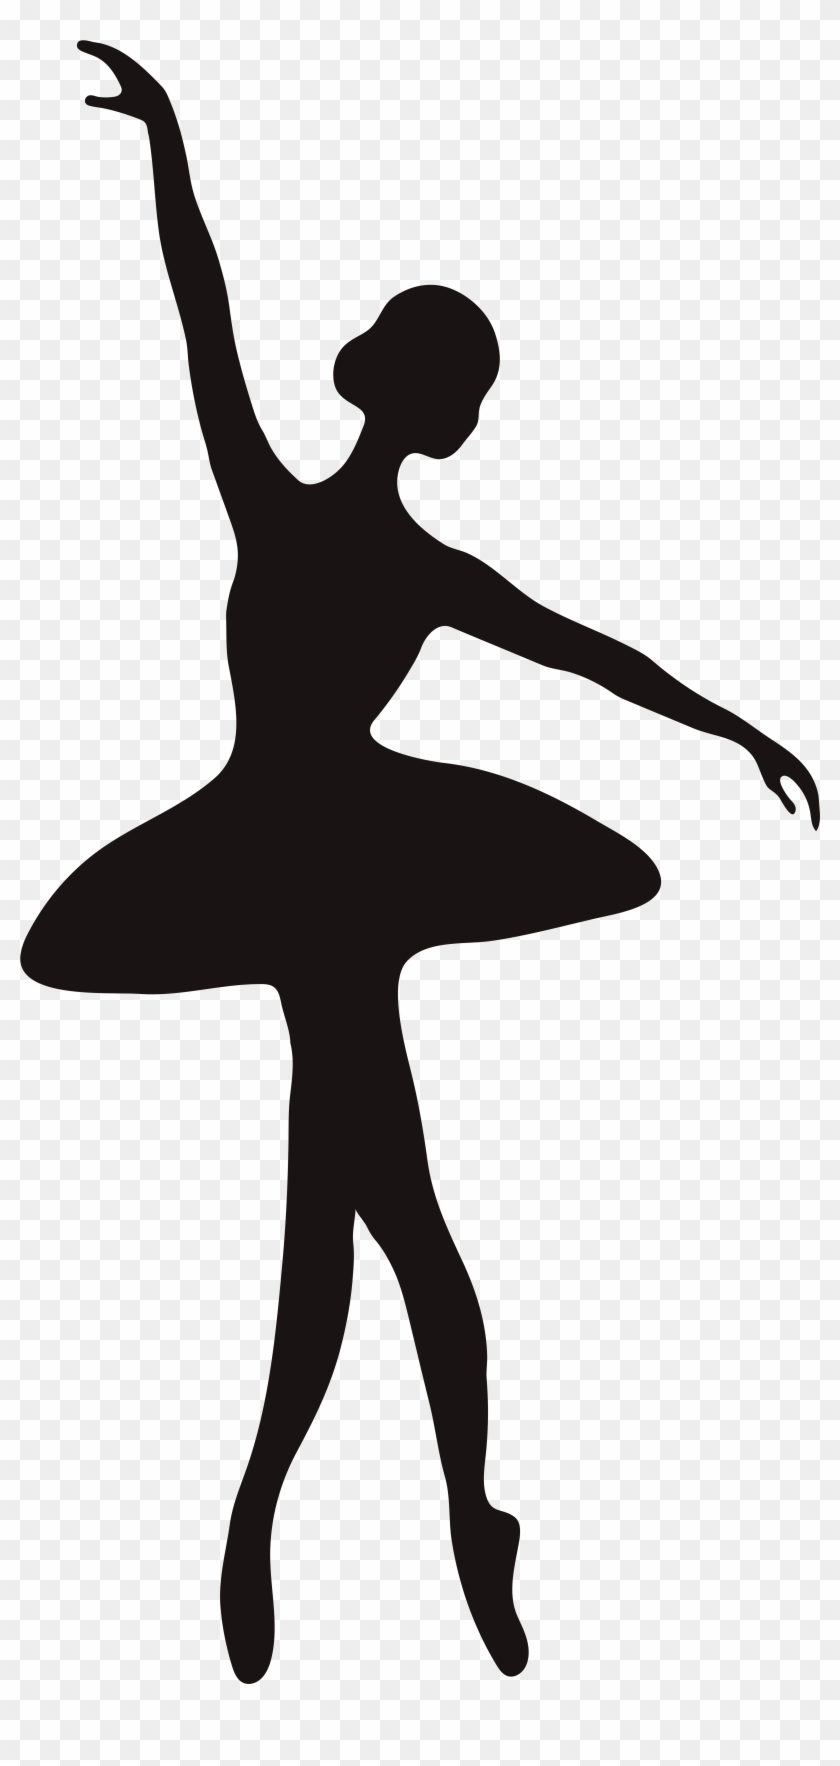 Ballerina Silhouette Png Clip Art Image - Ballerina Silhouette Png #10370